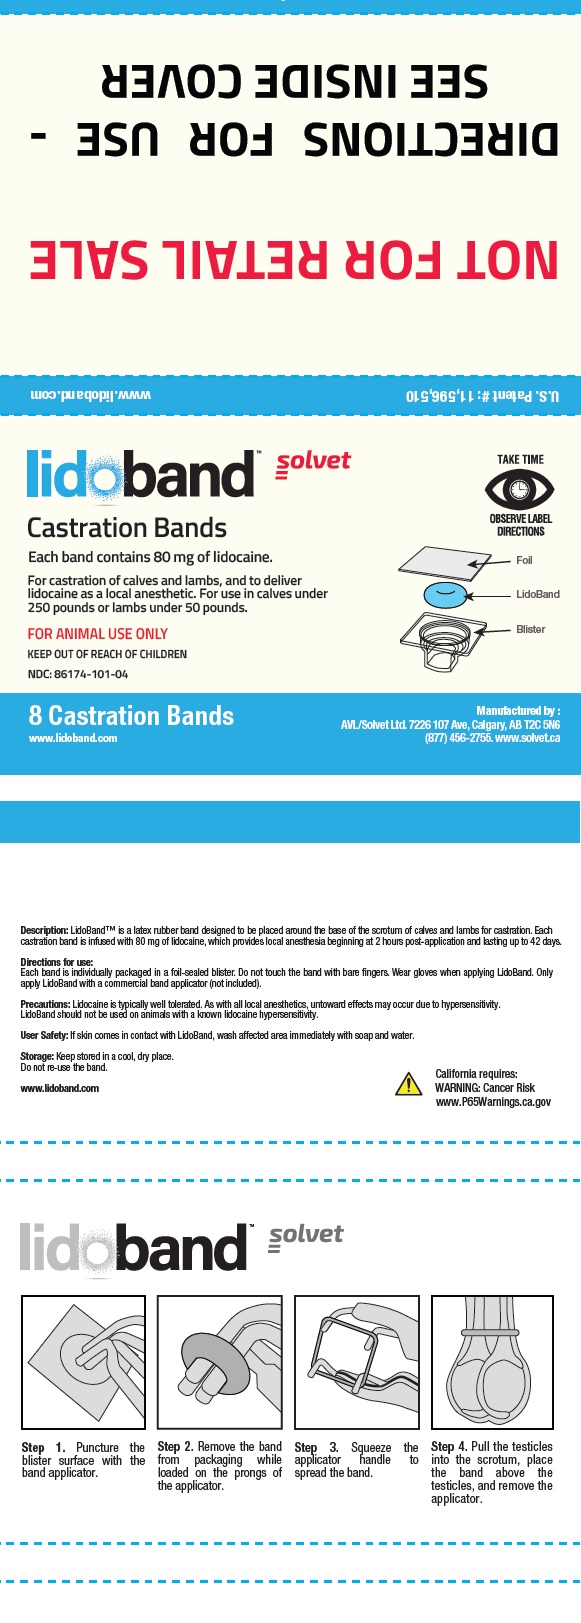 LidoBand Castration Bands